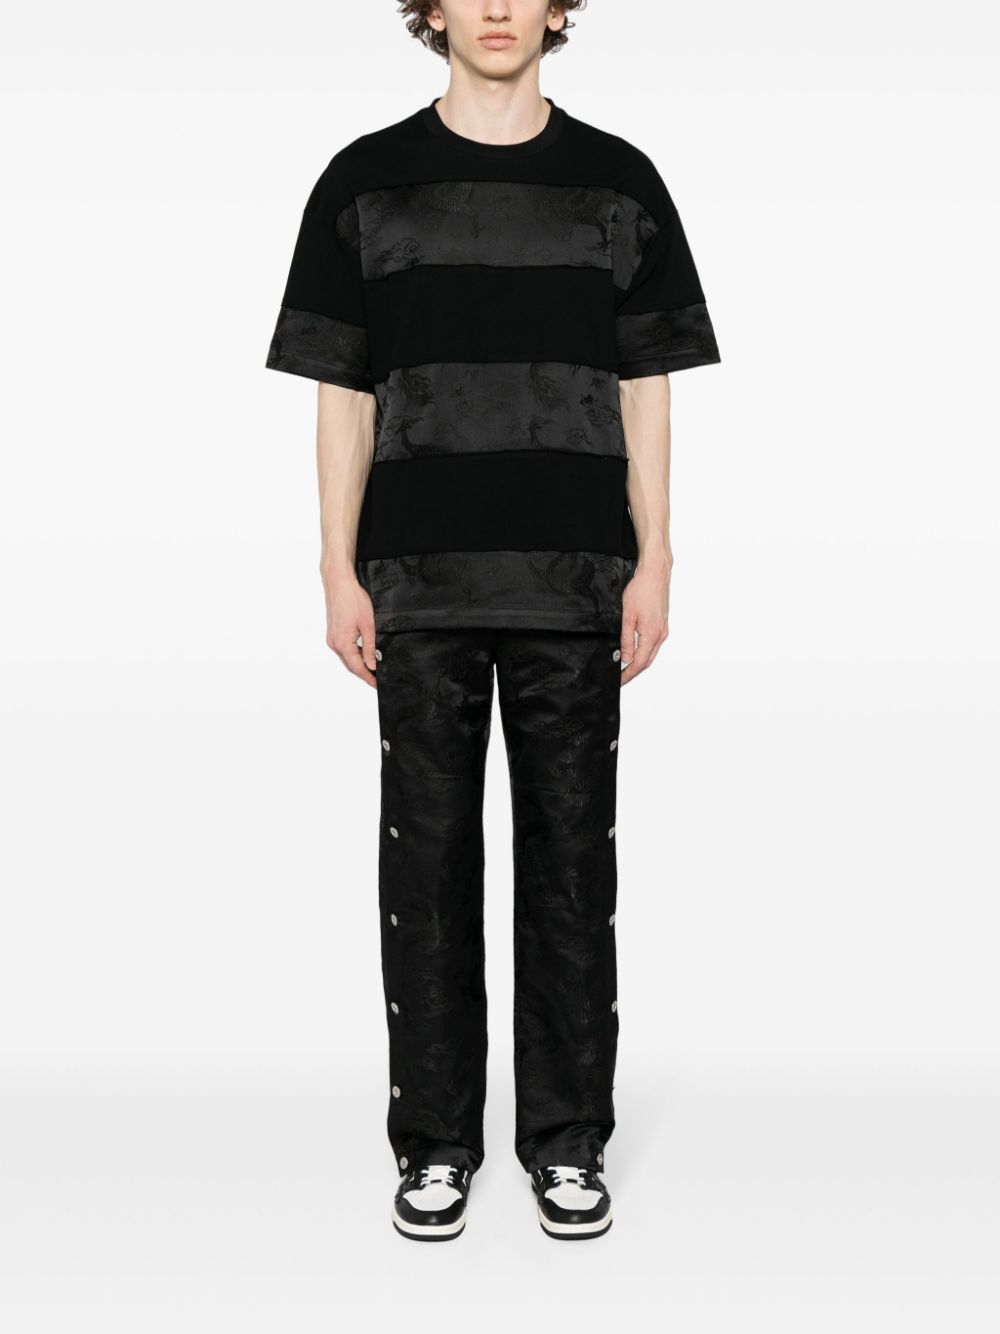 Feng Chen Wang T-shirt met jacquard - Zwart